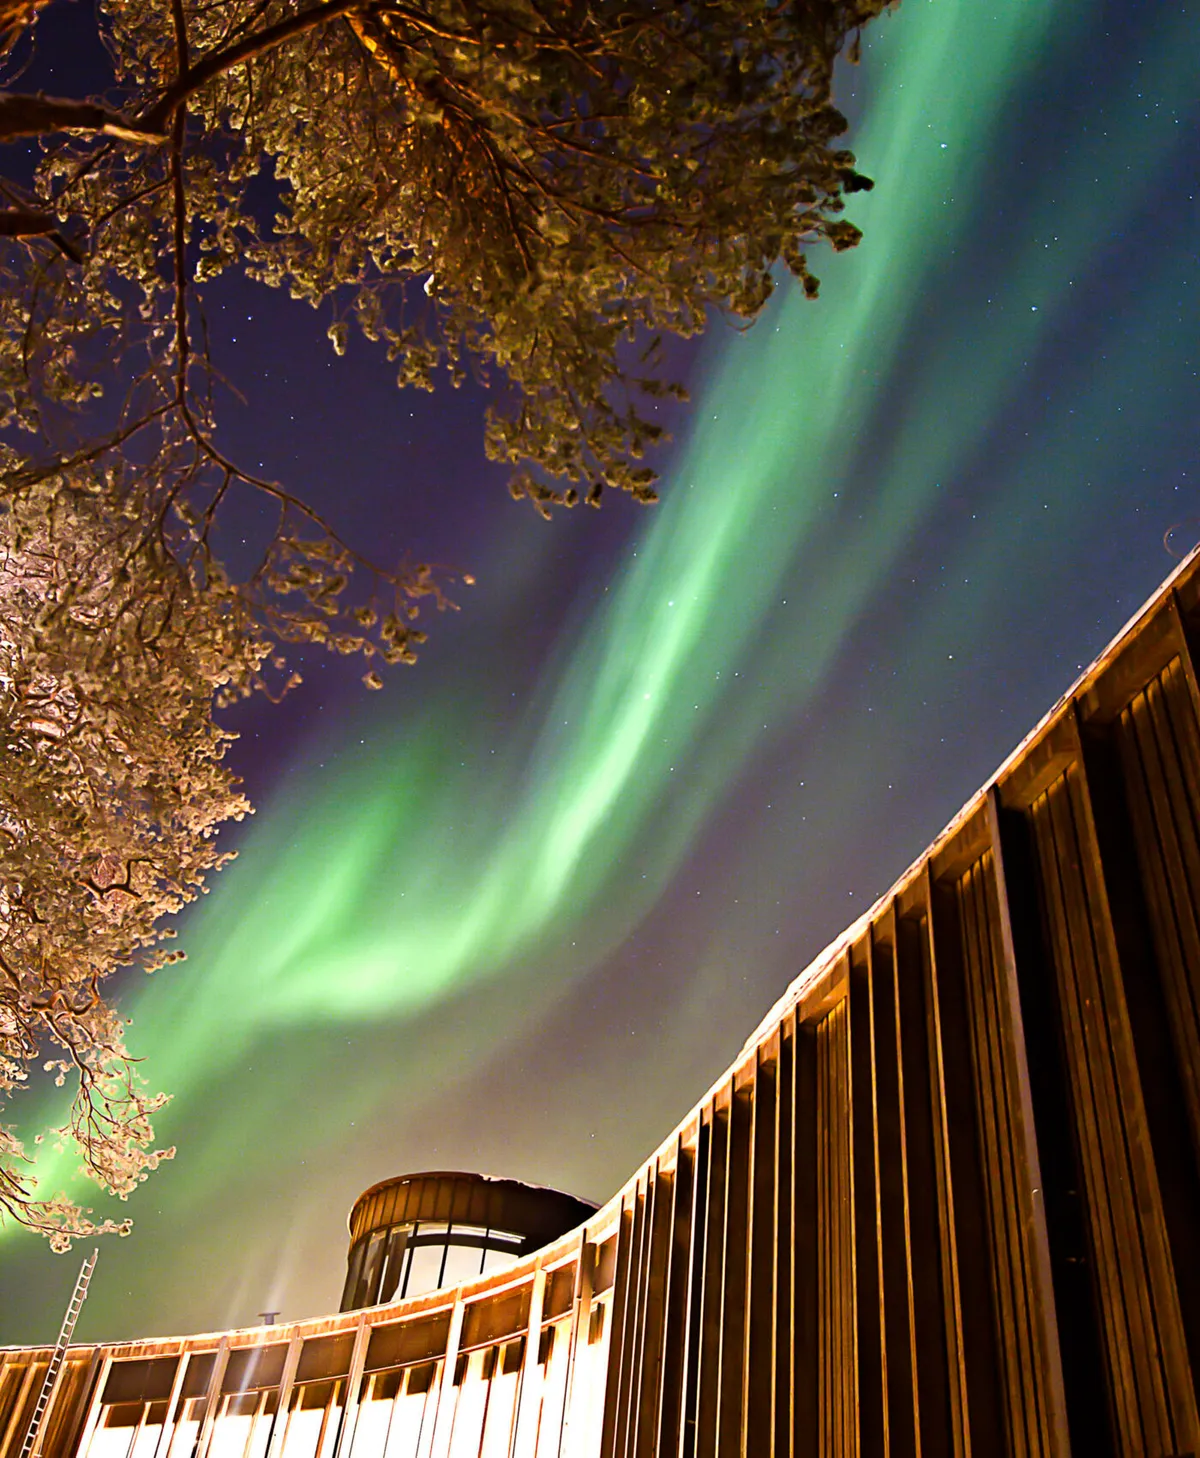 Aurora at North Inari by Premjith Narayanan, Laplands, Finland. Equipment: Canon 7D, Nikon lens 14-24mm F 2.8, Tripod.